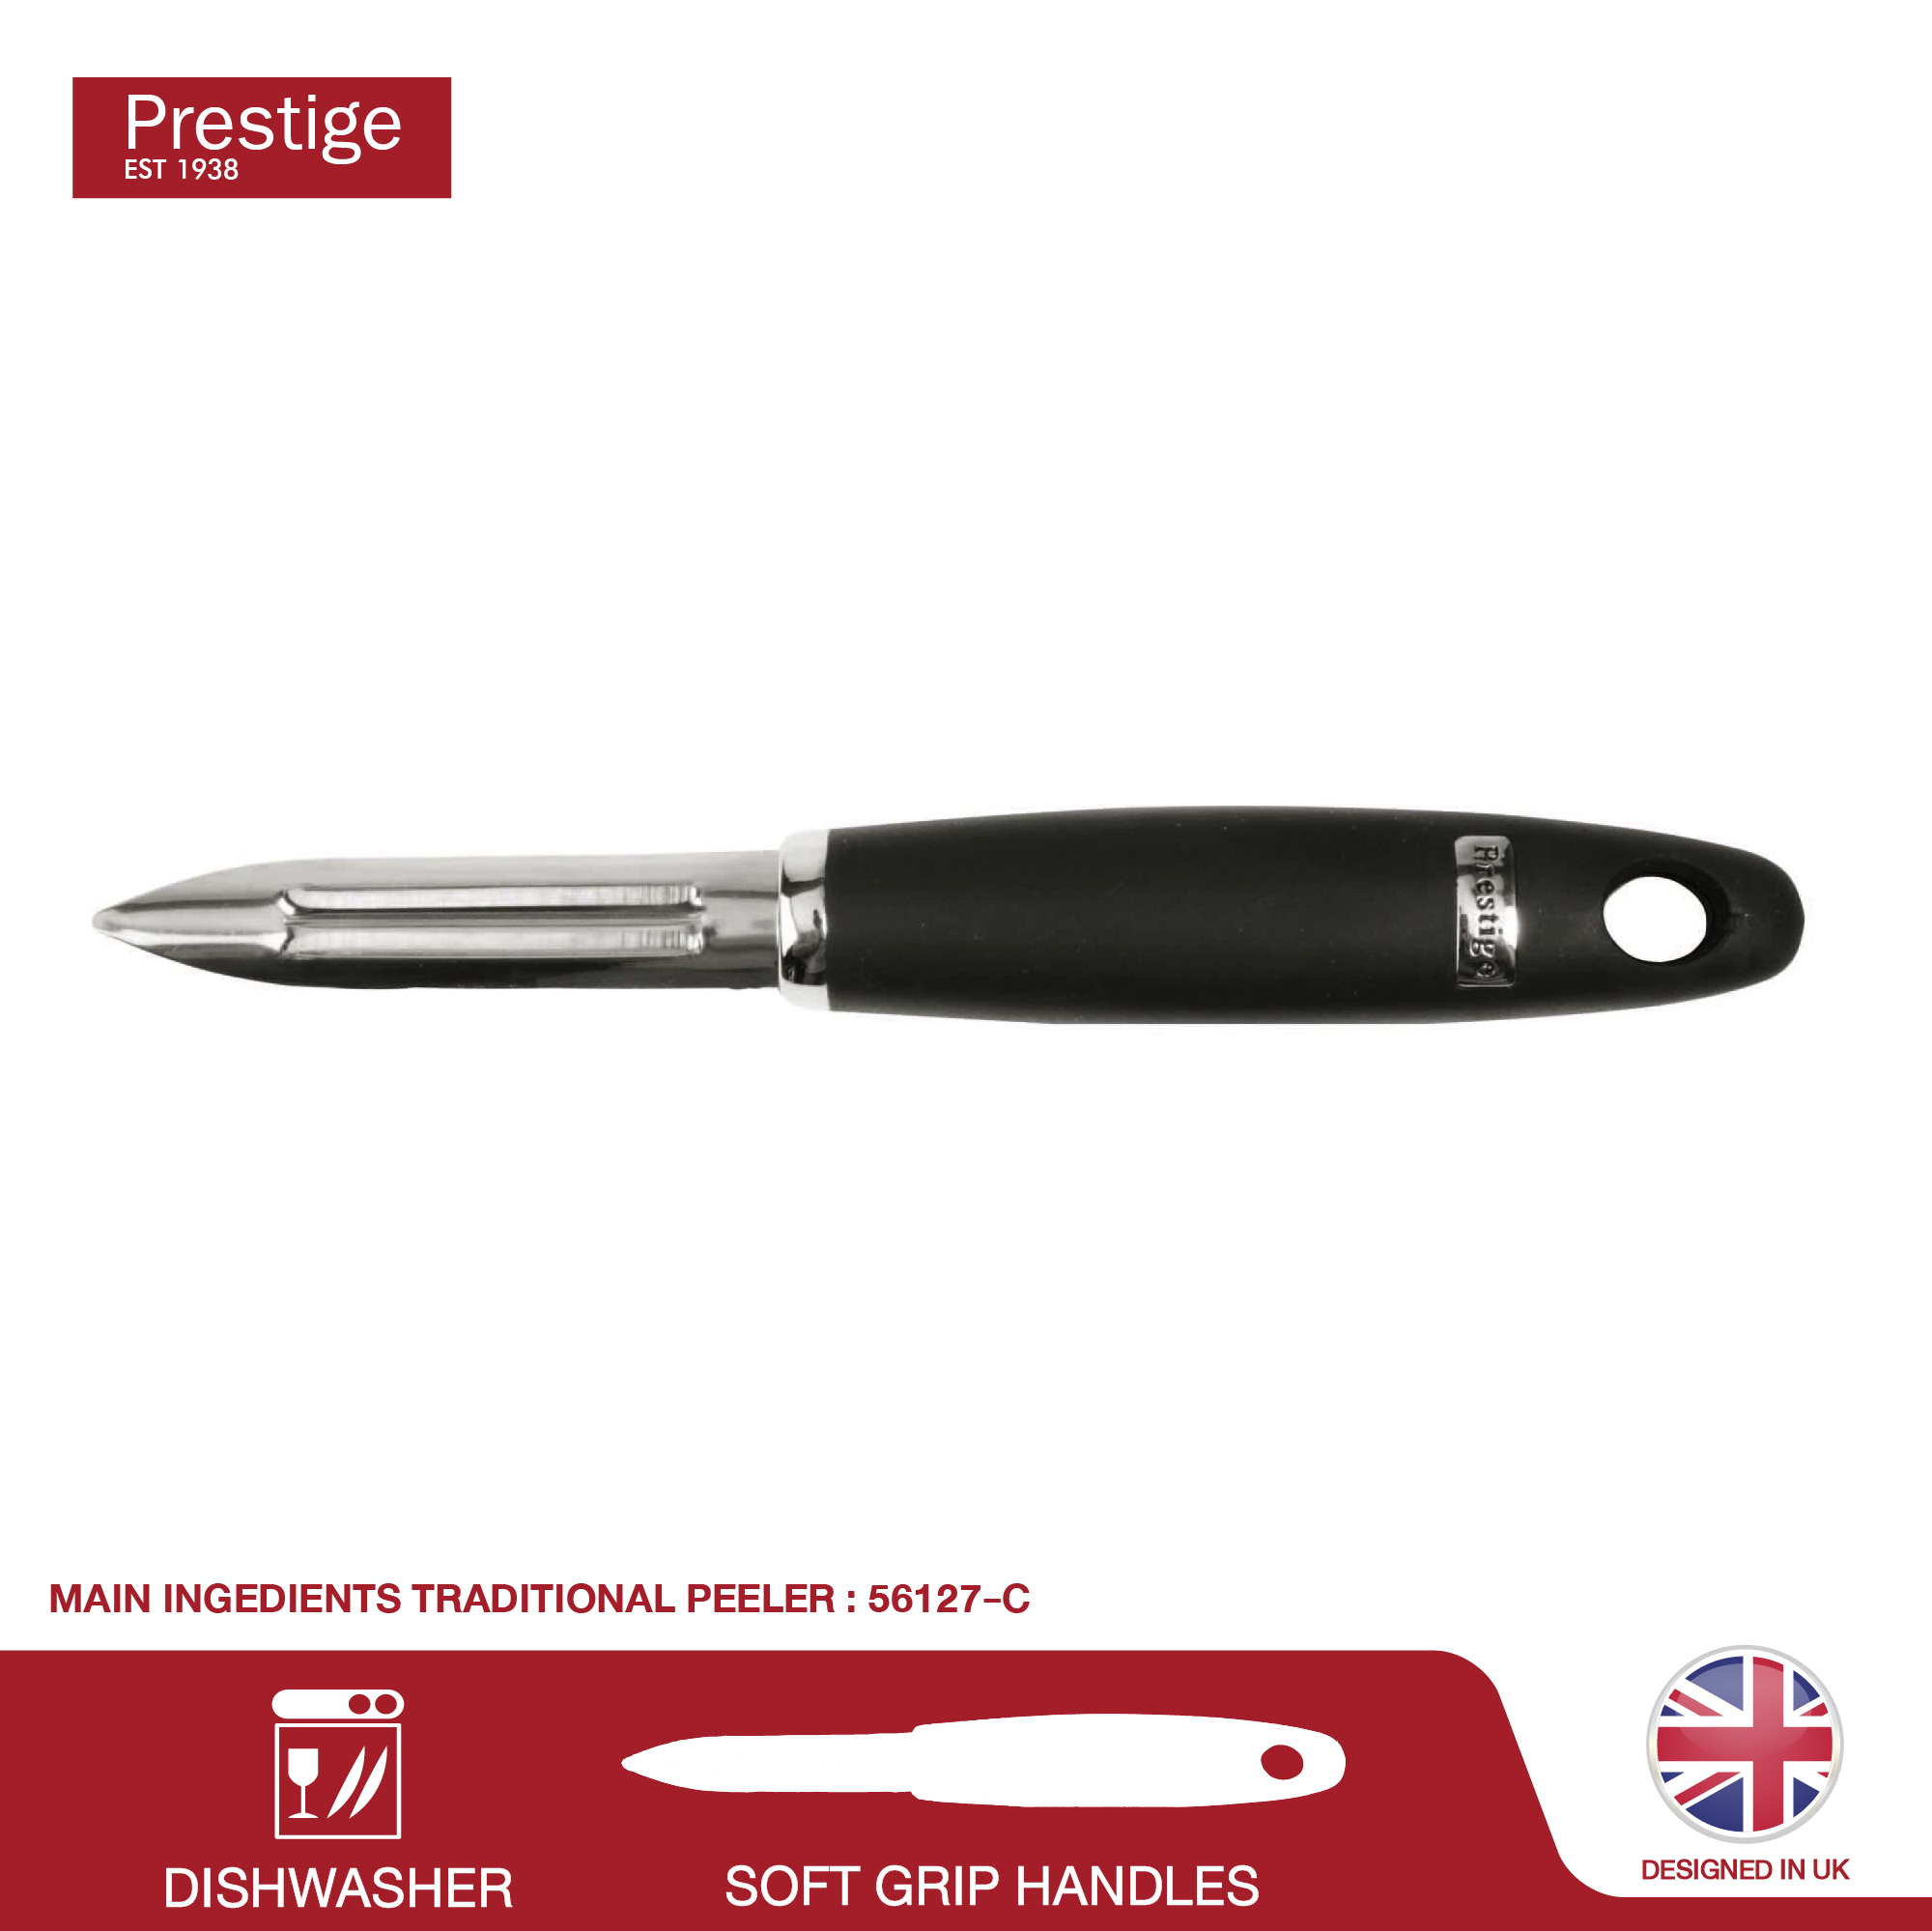 Prestige Create Tools & Gadgets - Traditional Peeler มีดปอกผลไม้ ปอกเปลือก คม 2 ด้าน ยาว 5 ซม ใบมีดสเตลเลสสตีค ปลายแหลม ด้ามจับกันลื่น ถนัดมือ แข็งแรง ทนทาน (56127-C)